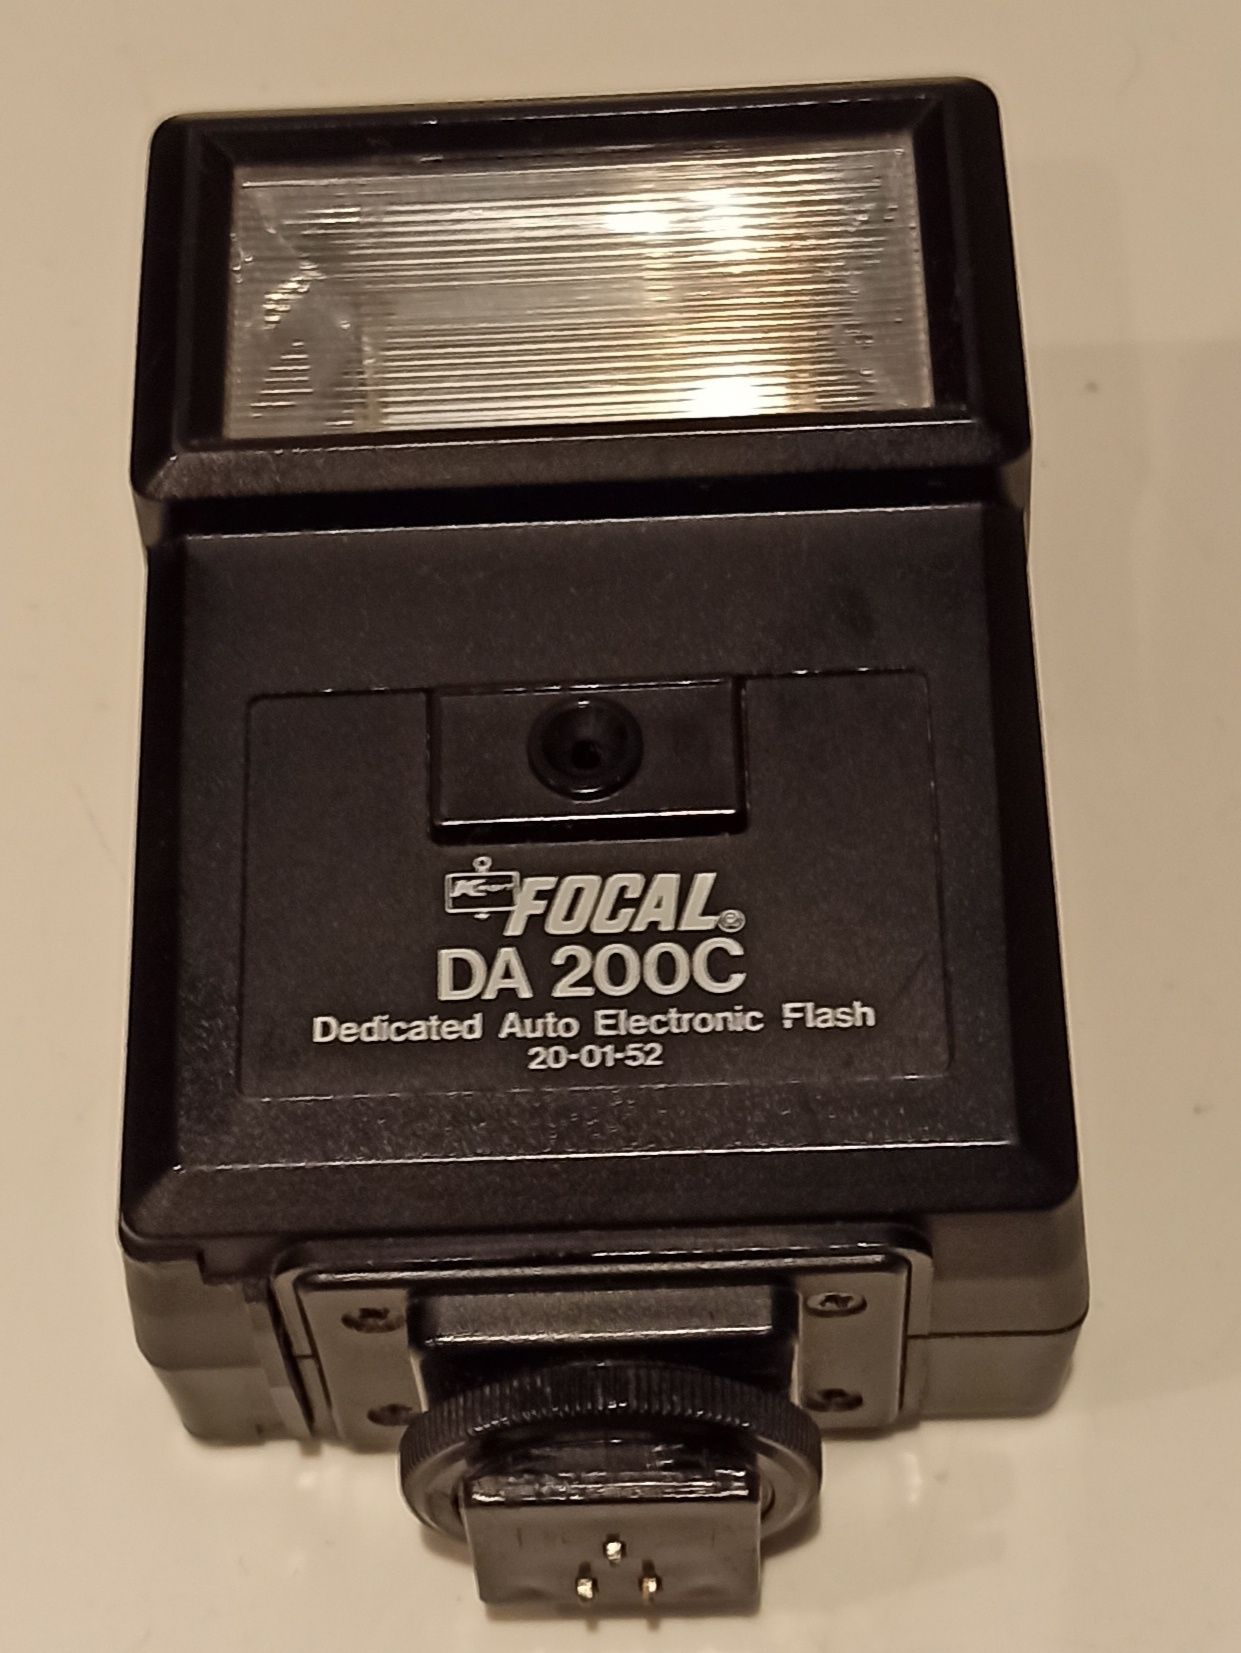 Lampa błyskowa Focal DA 200C

Dedicated Auto Electronic Flash 20-01-52